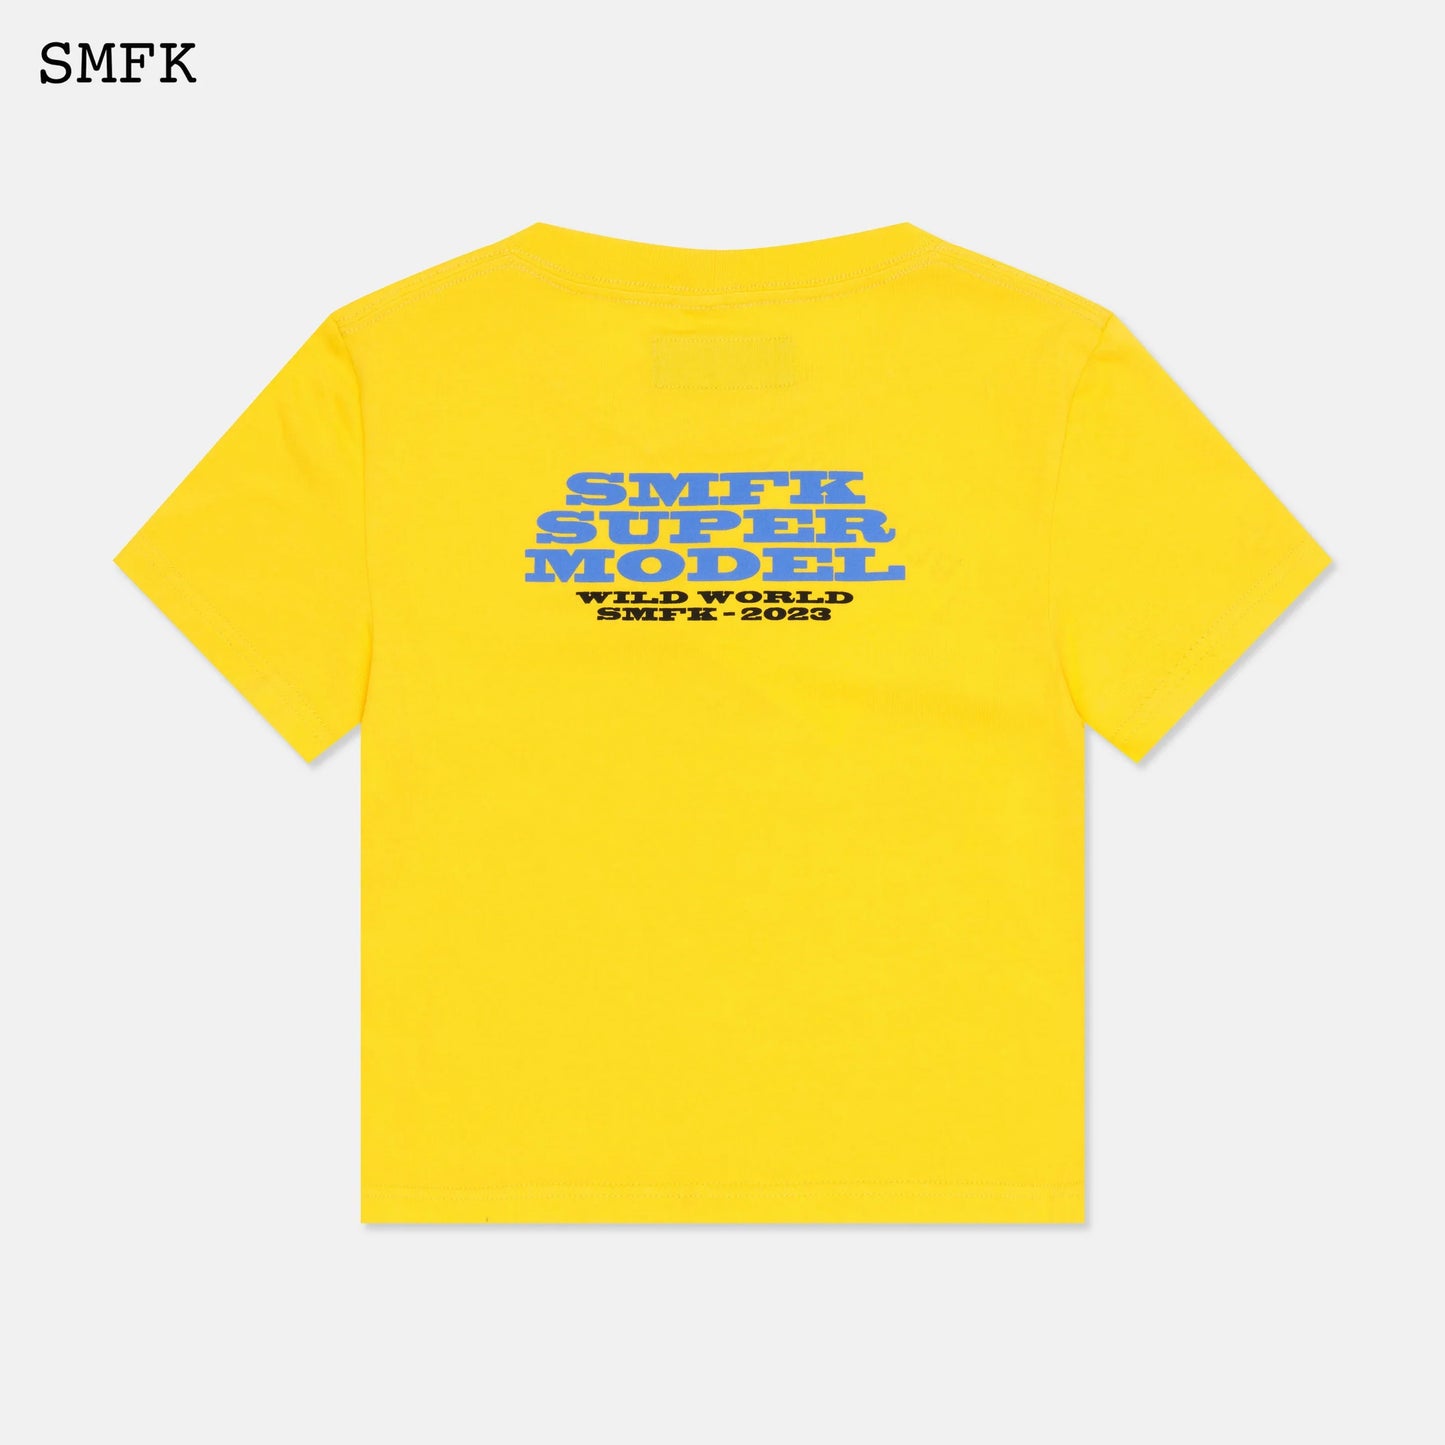 Skinny Model Yellow Tight T-shirt